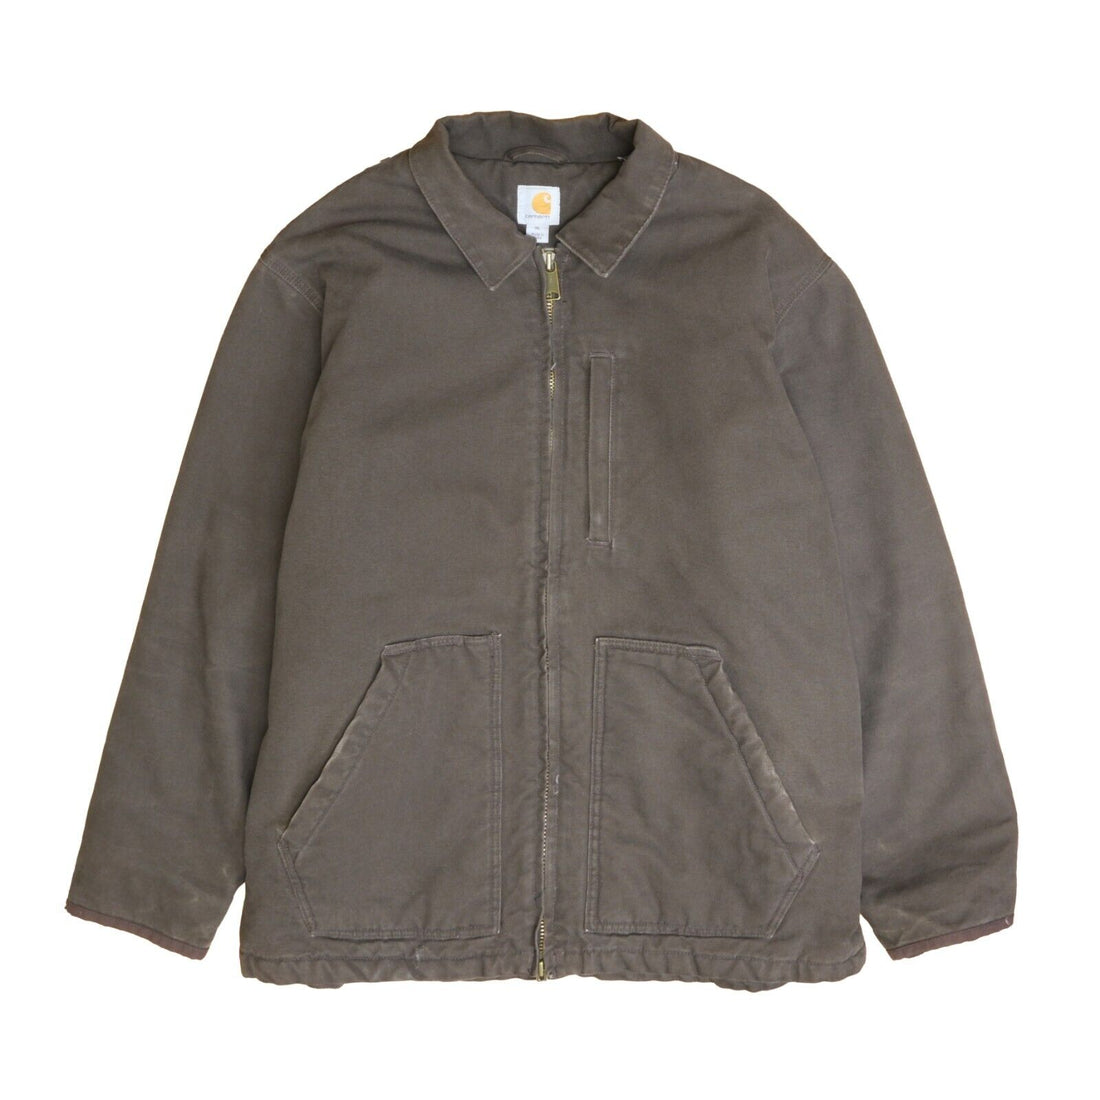 Vintage Carhartt Canvas Work Ridge Jacket Size XL Brown Sherpa Lined